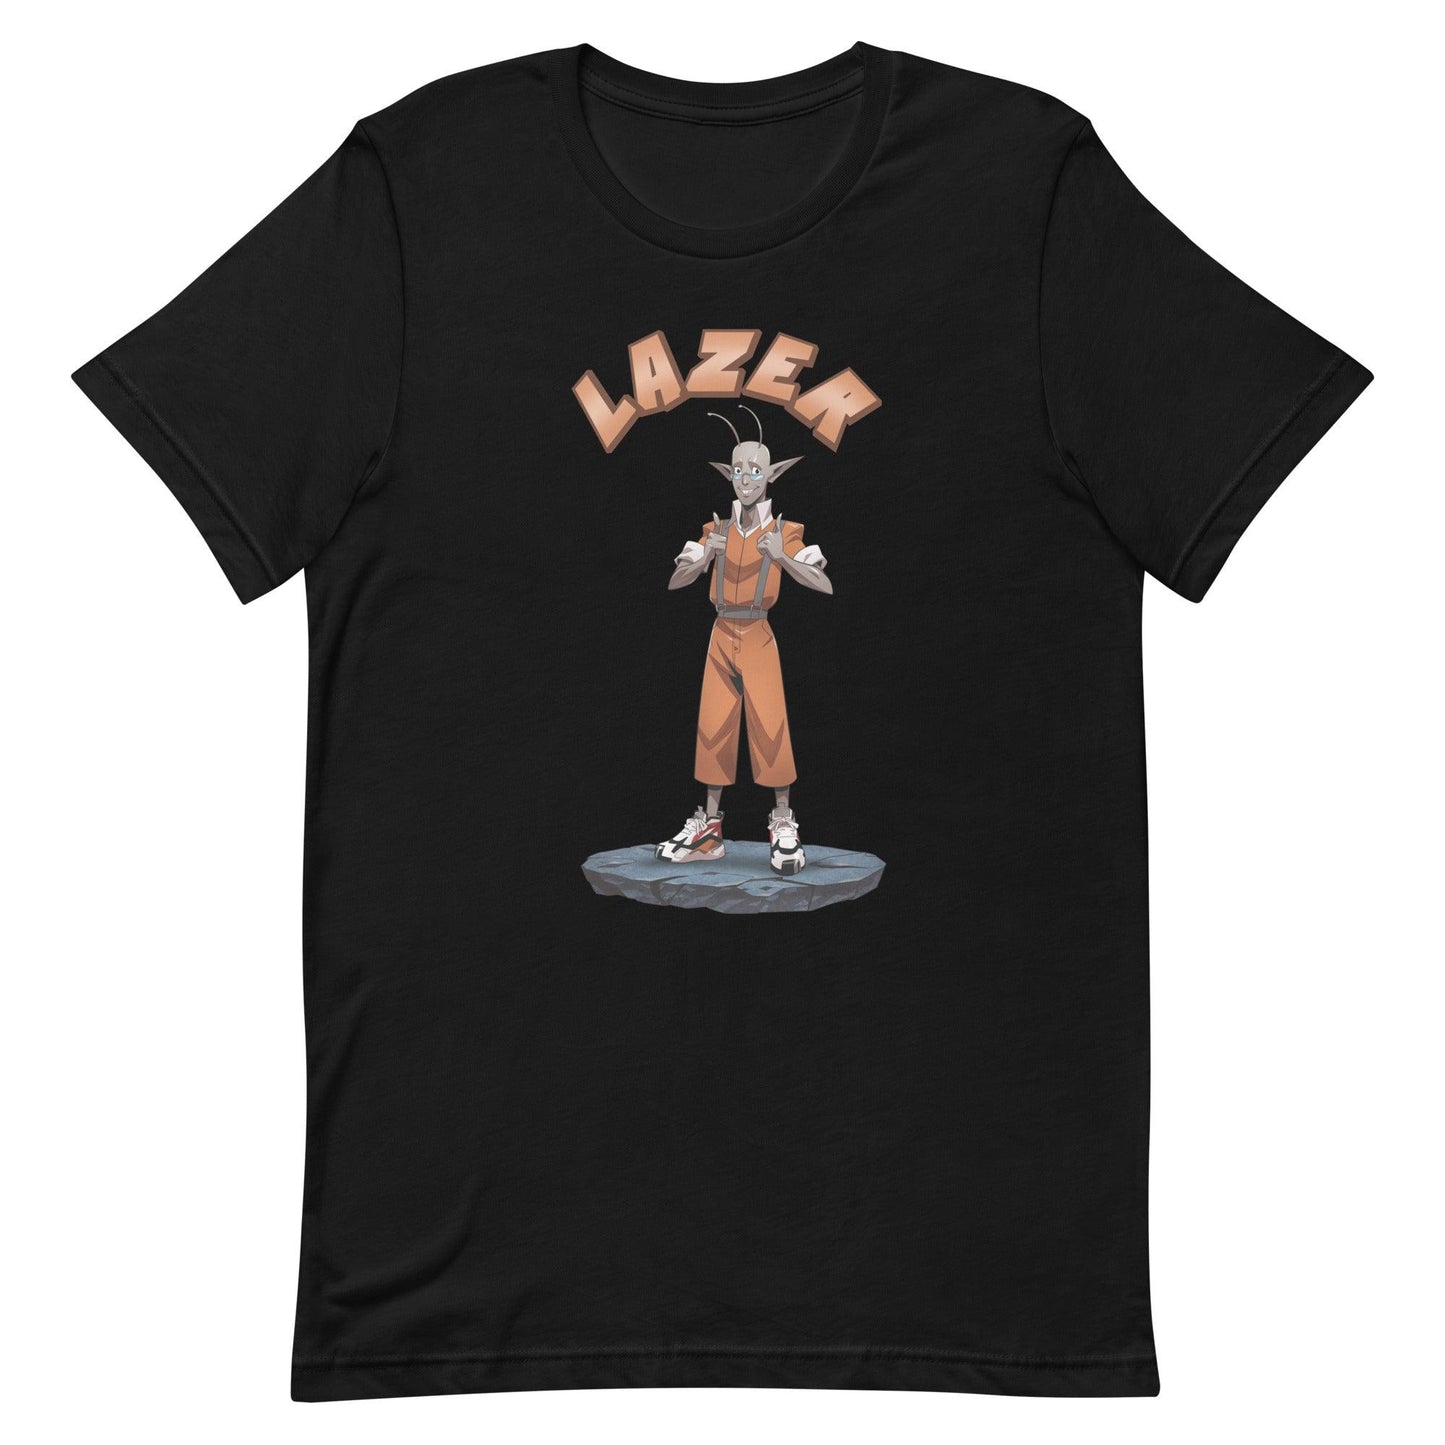 Gary Forbes "Lazer" t-shirt - Fan Arch